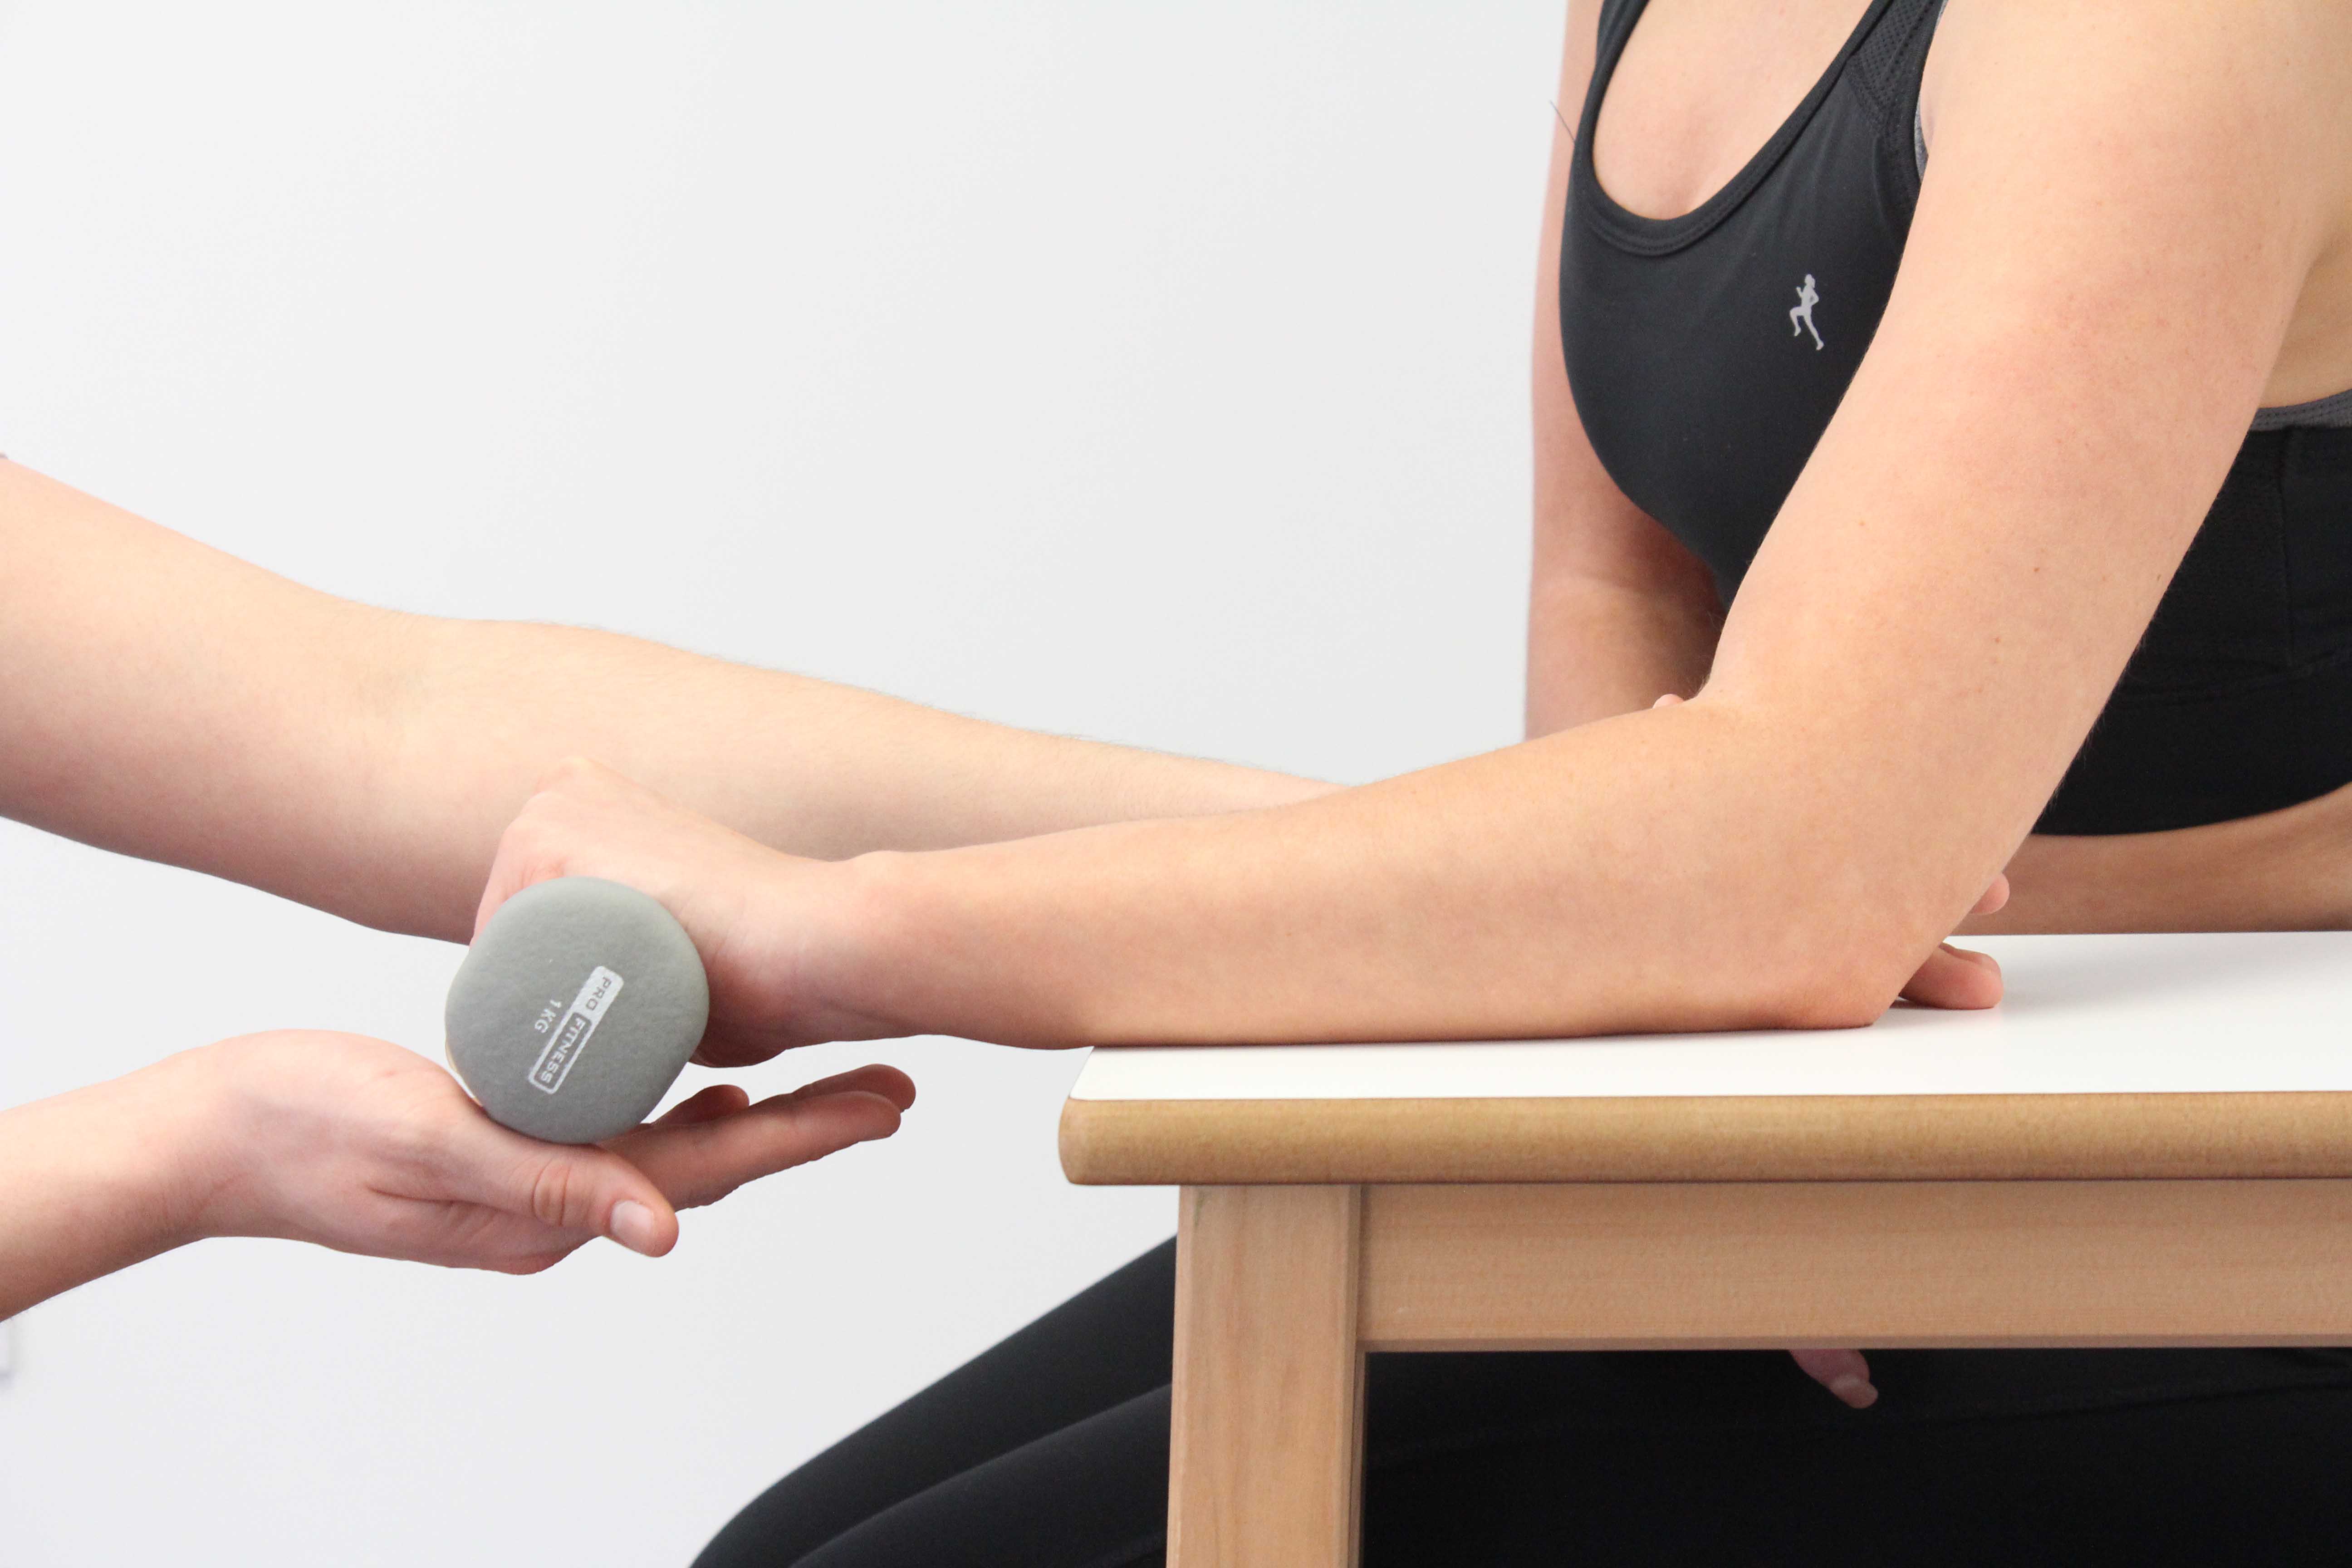 Progressive wrist strengthening exercises supervised by physiotherapist